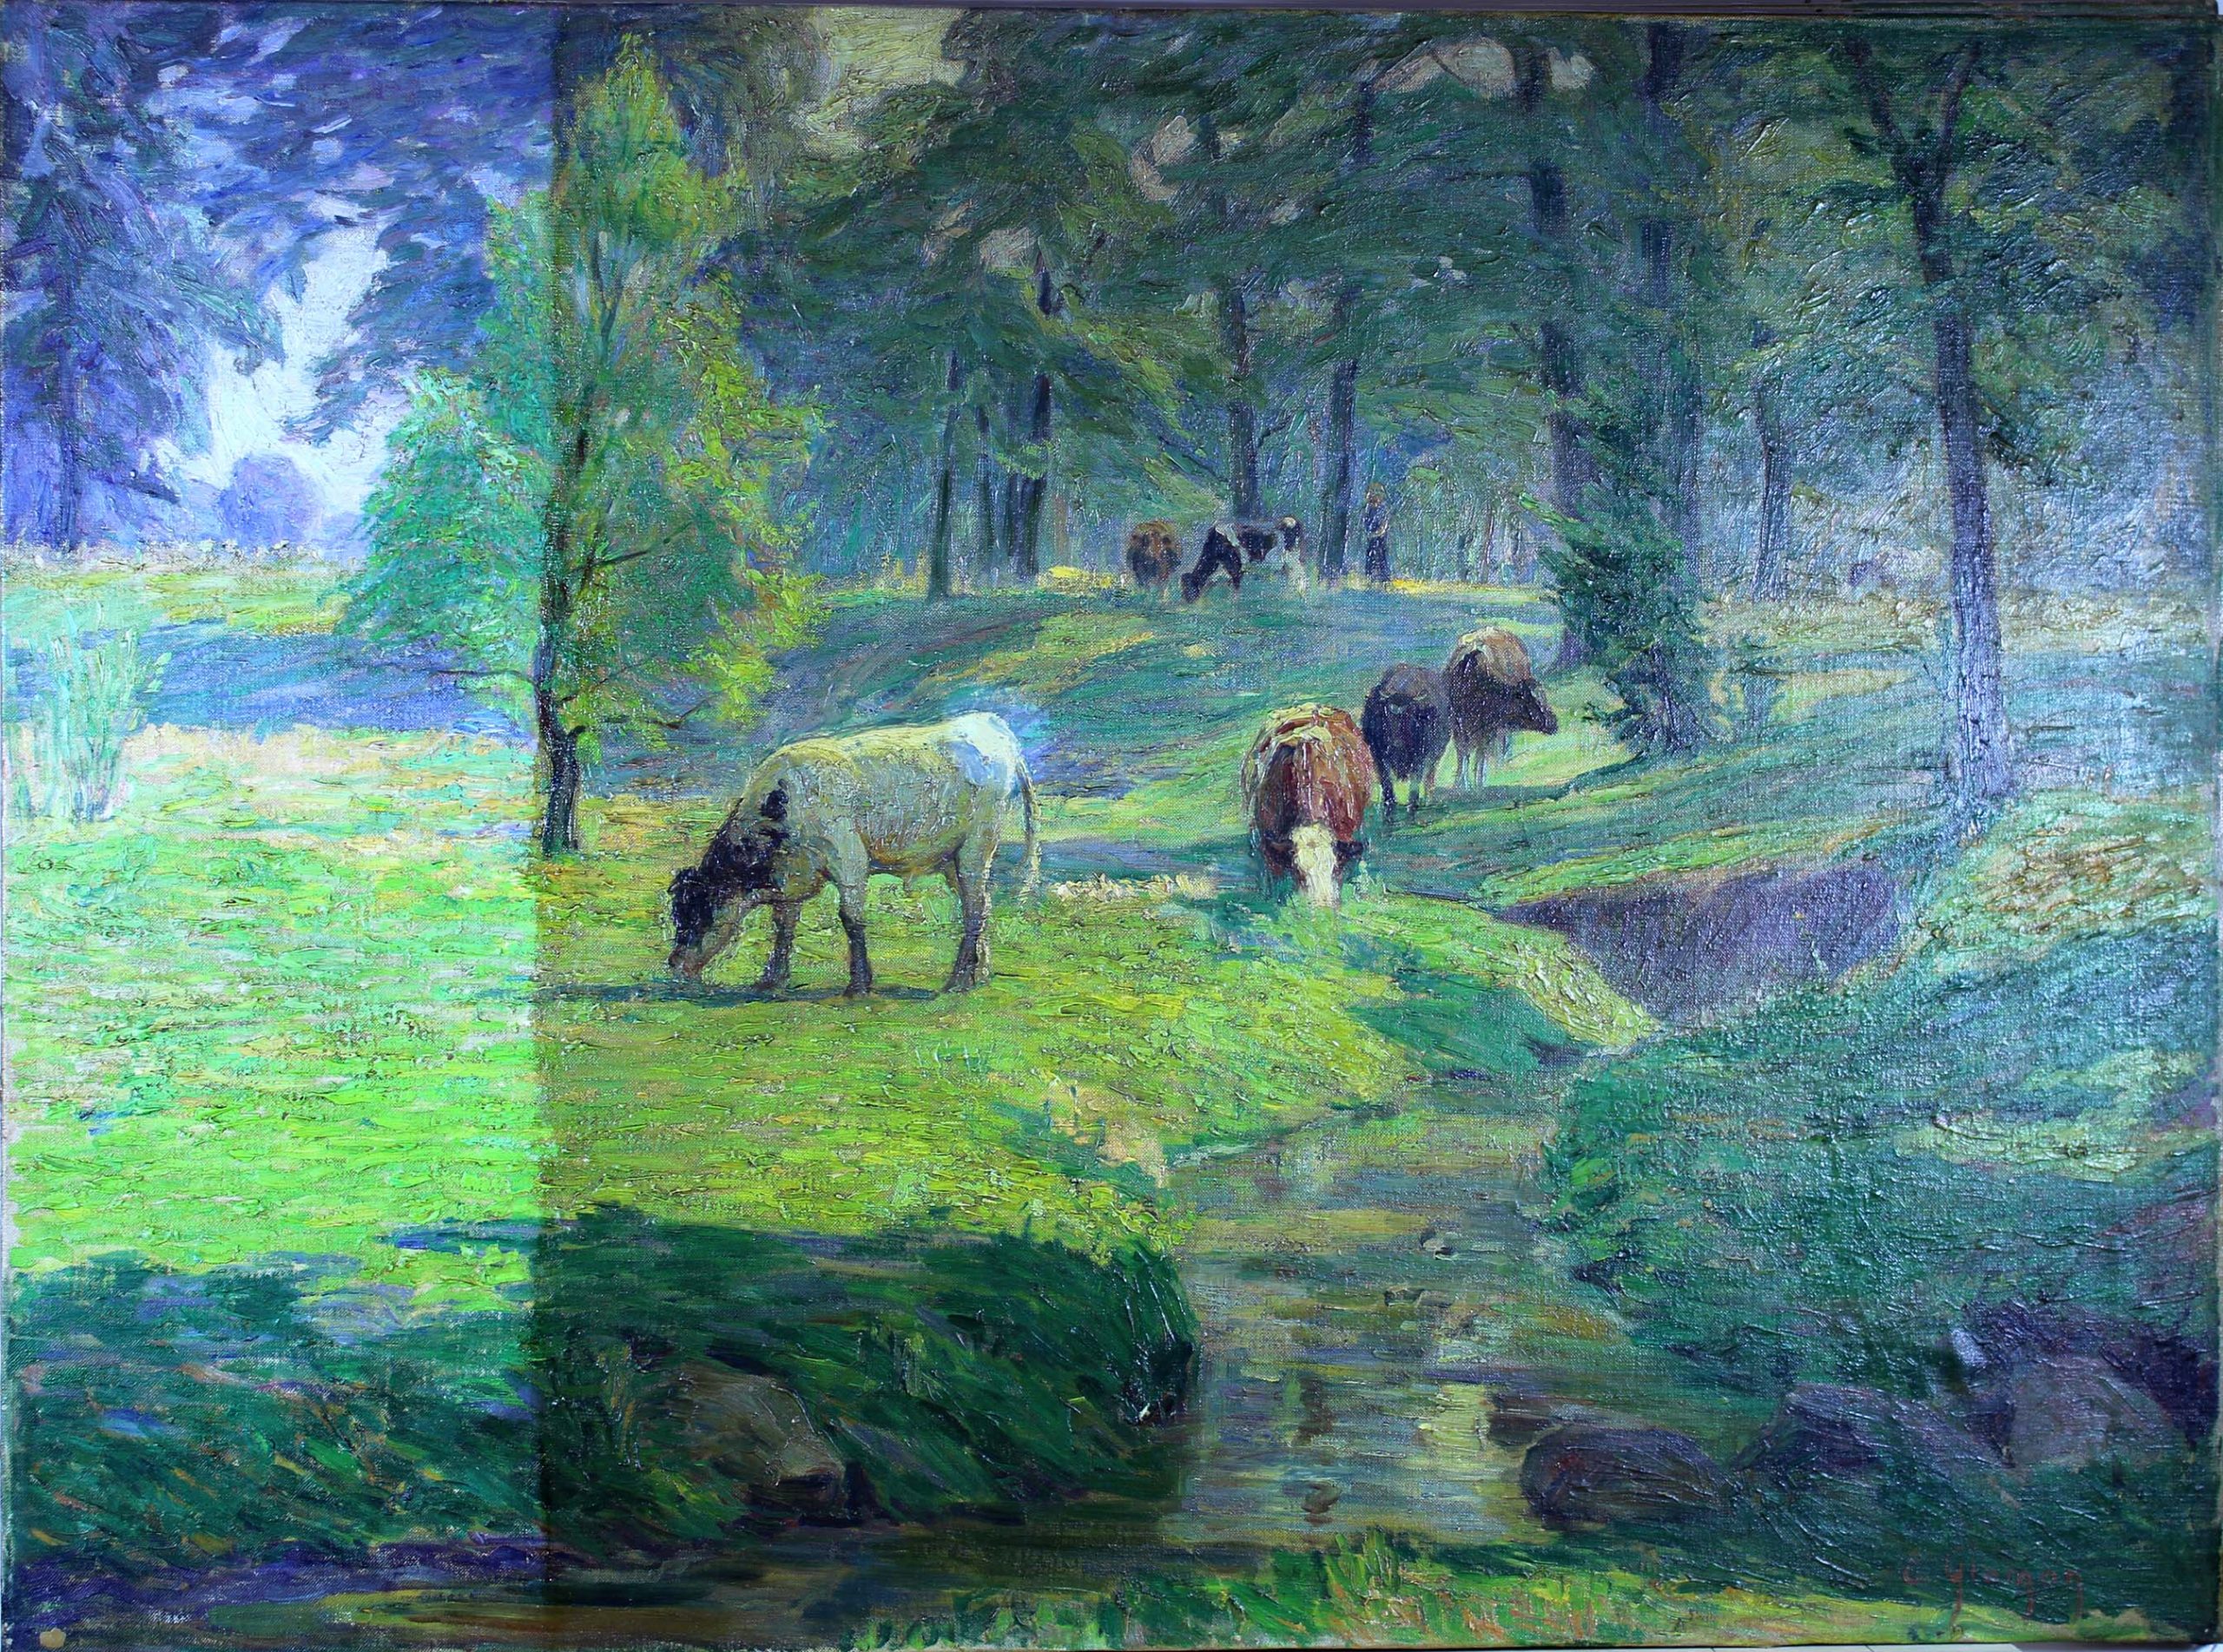 "The Pasture" by Eugenie Glaman, Vanderpoel Art Association